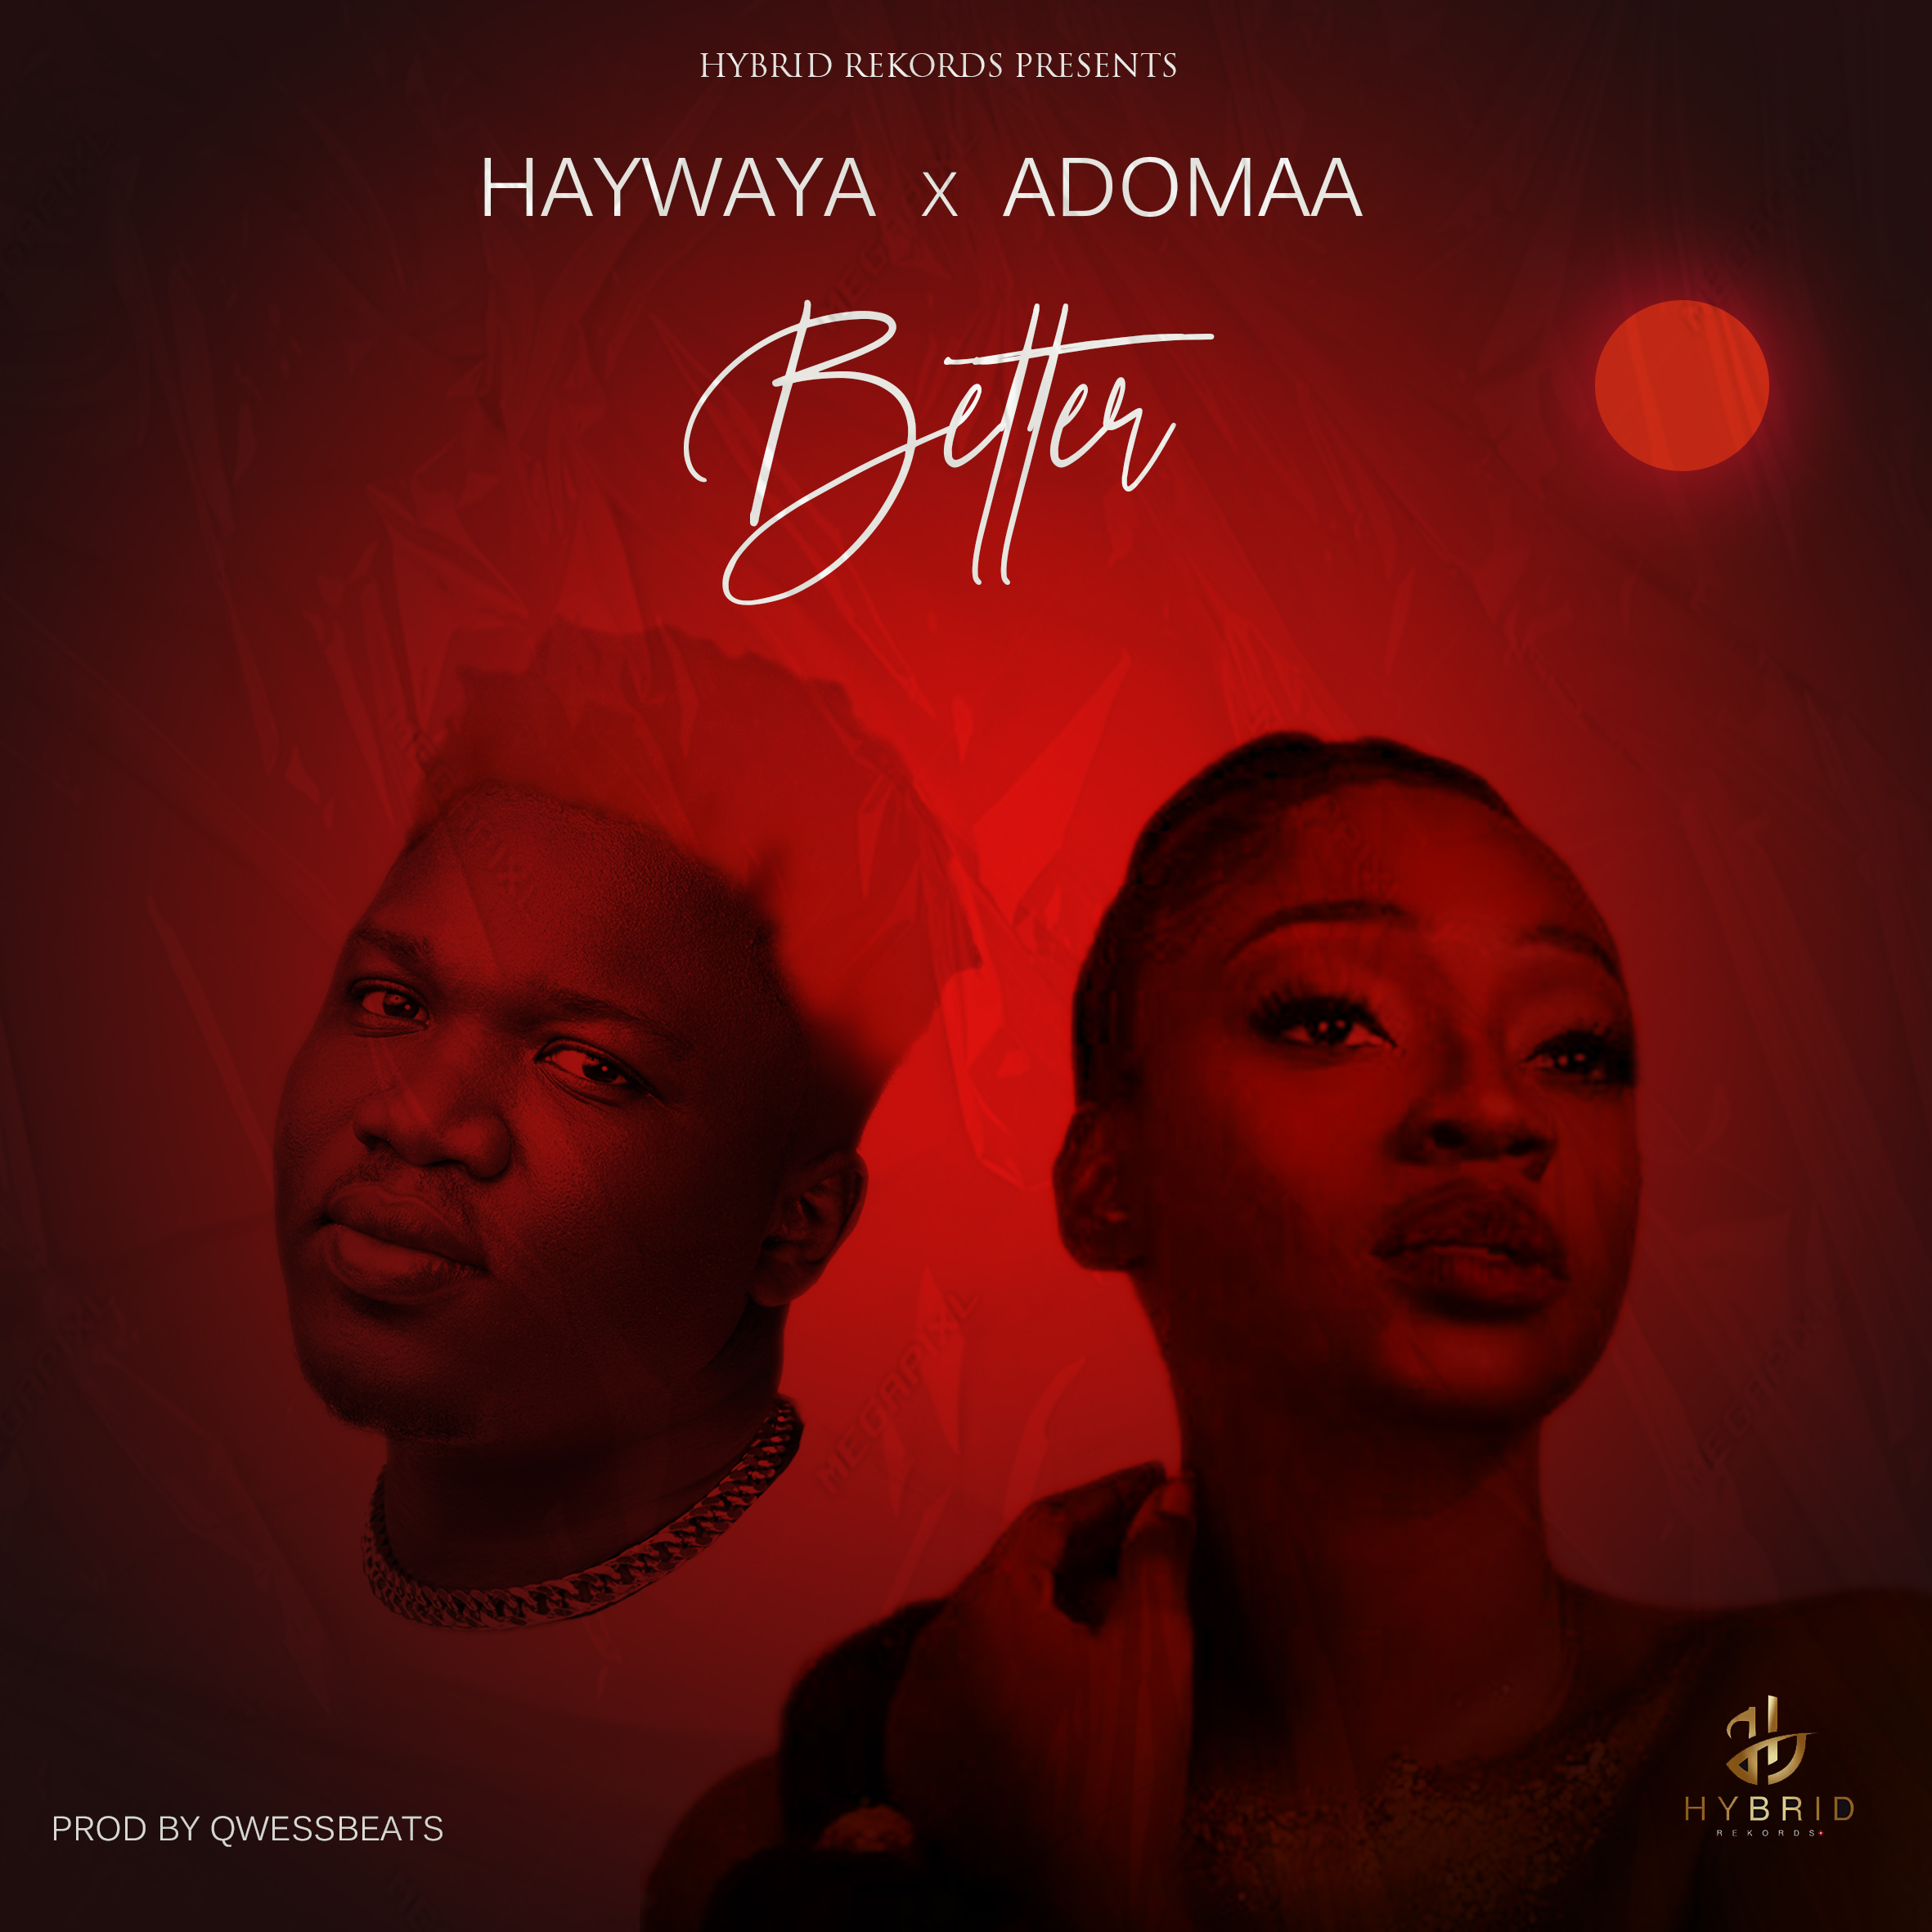 Haywaya Shares BETTER Love Song With Adomaa